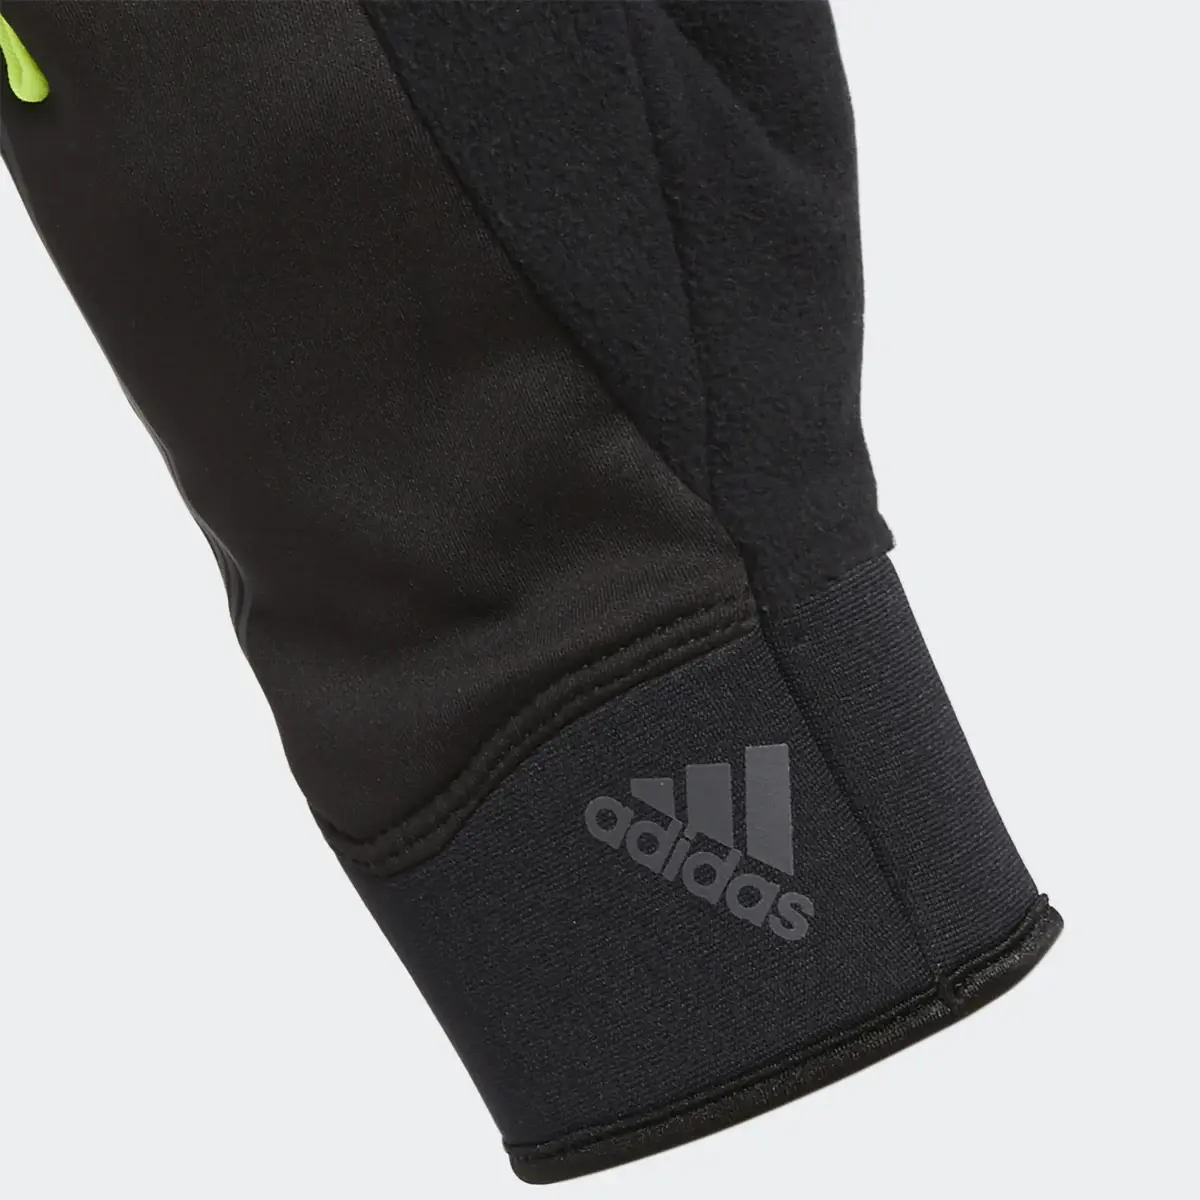 Adidas Prime Gloves. 3